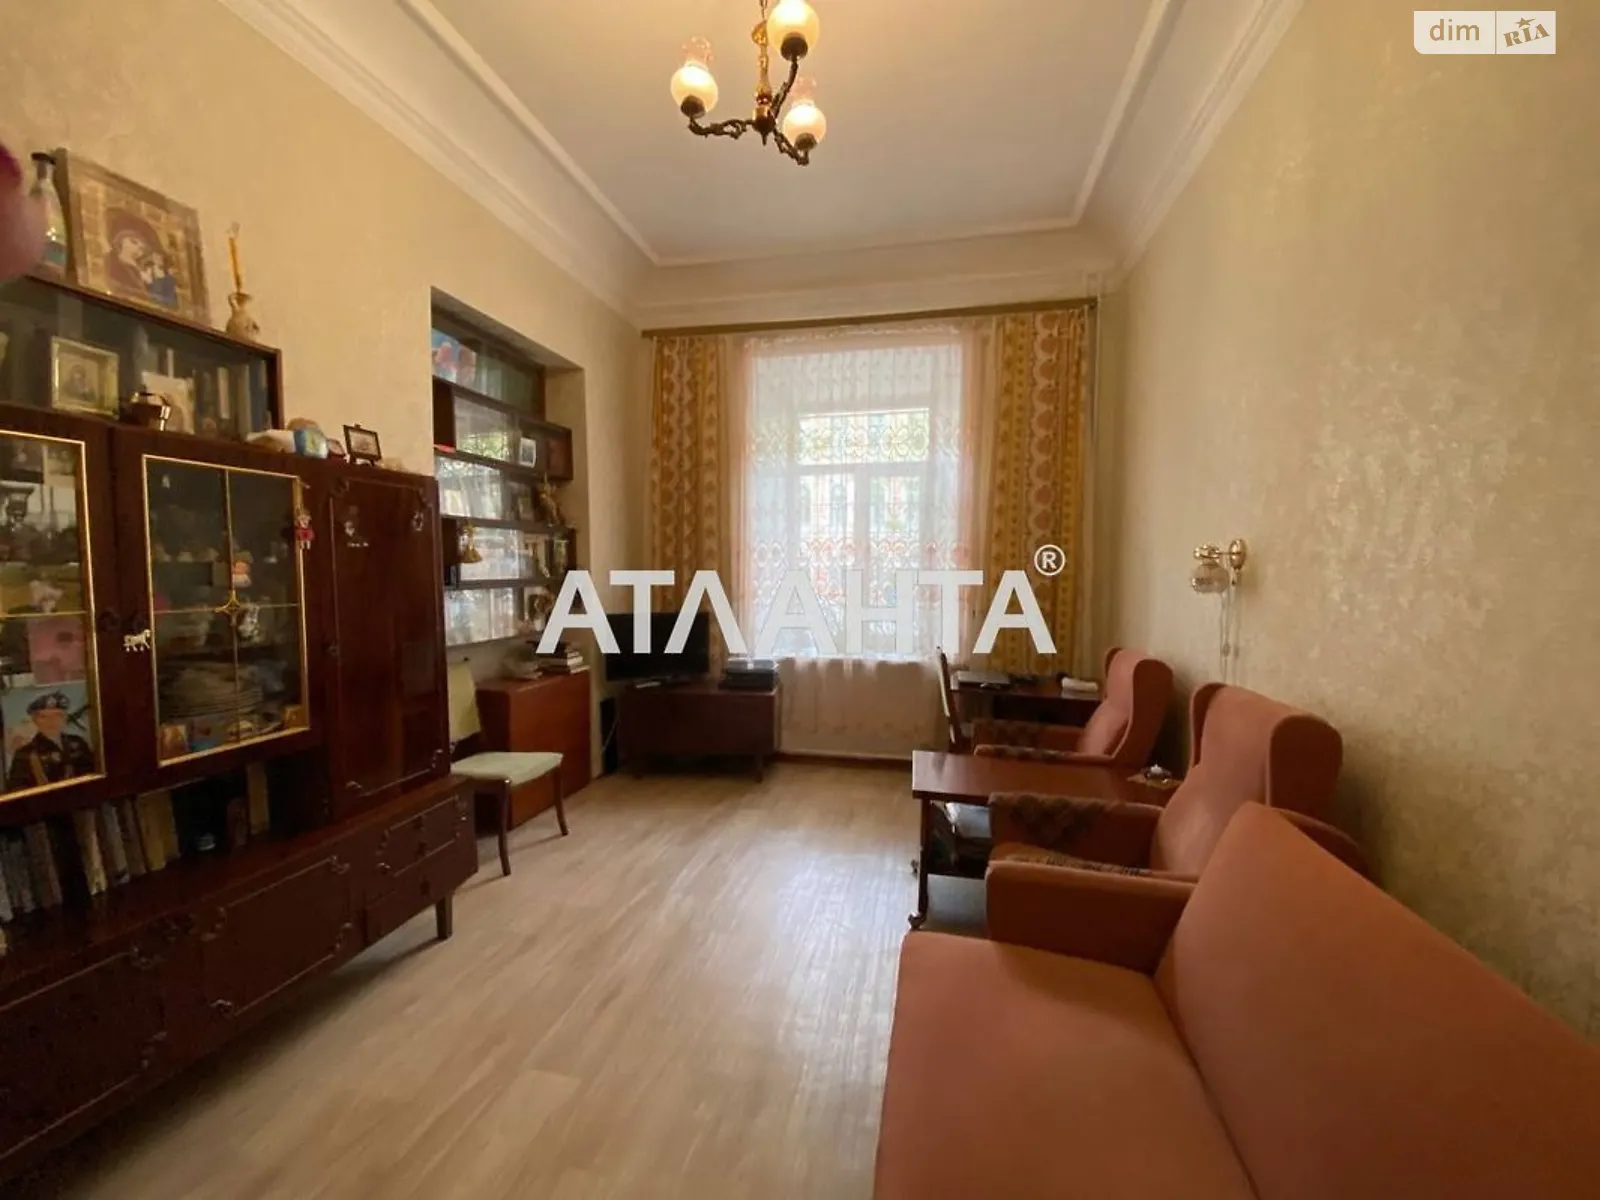 Продается комната 44 кв. м в Одессе, цена: 25000 $ - фото 1